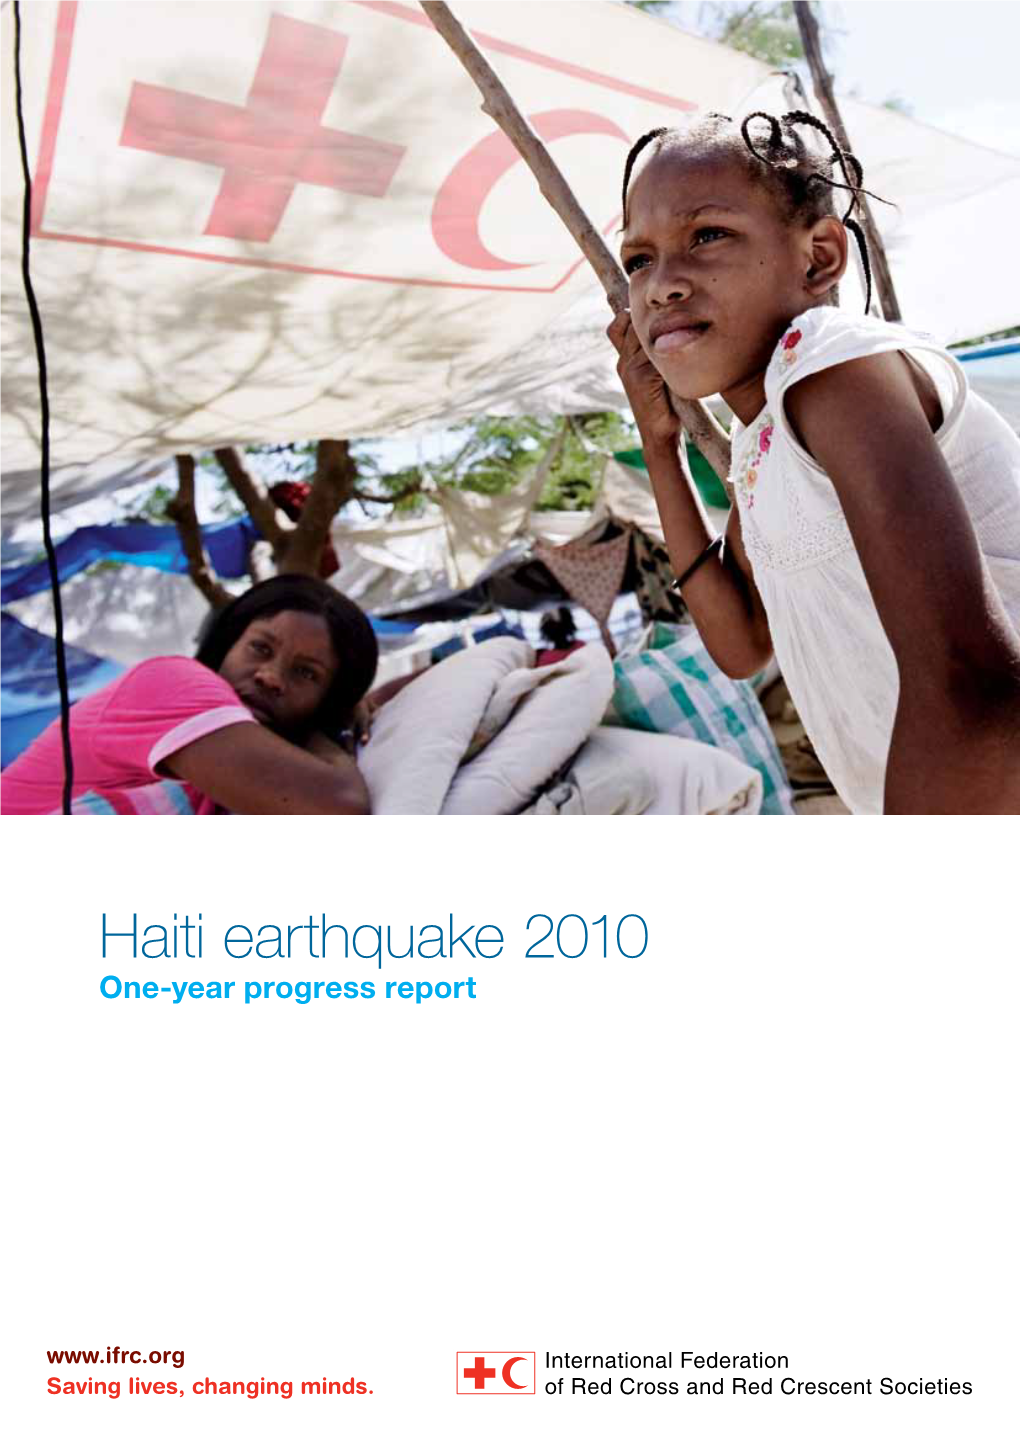 Haiti Earthquake 2010 One-Year Progress Report